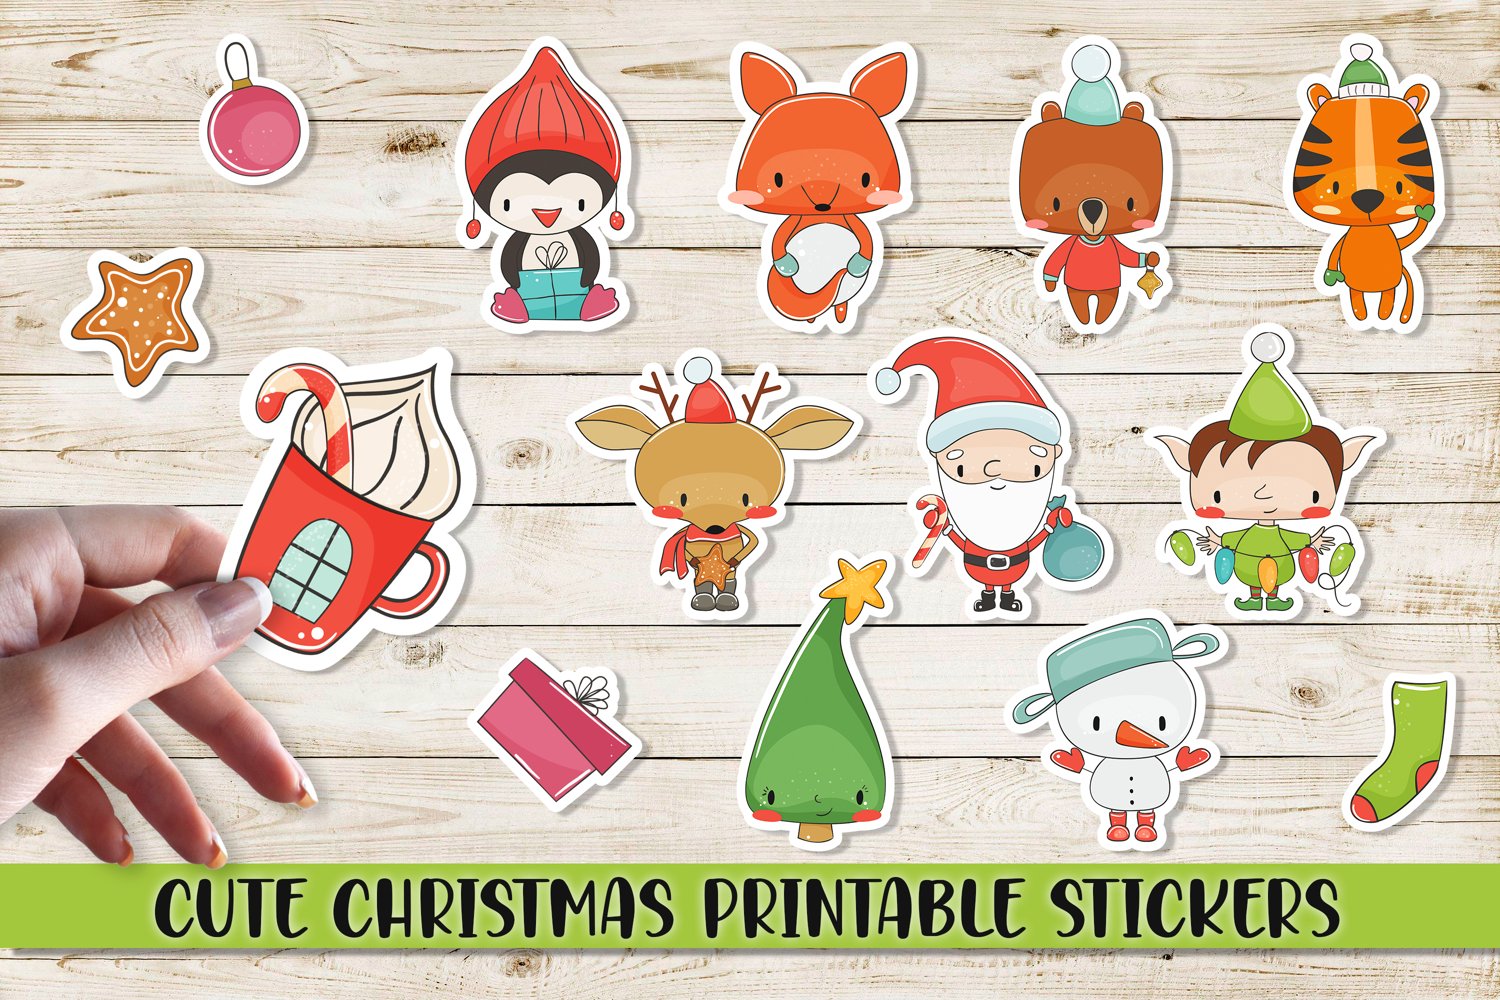 Cute Christmas printable stickers.